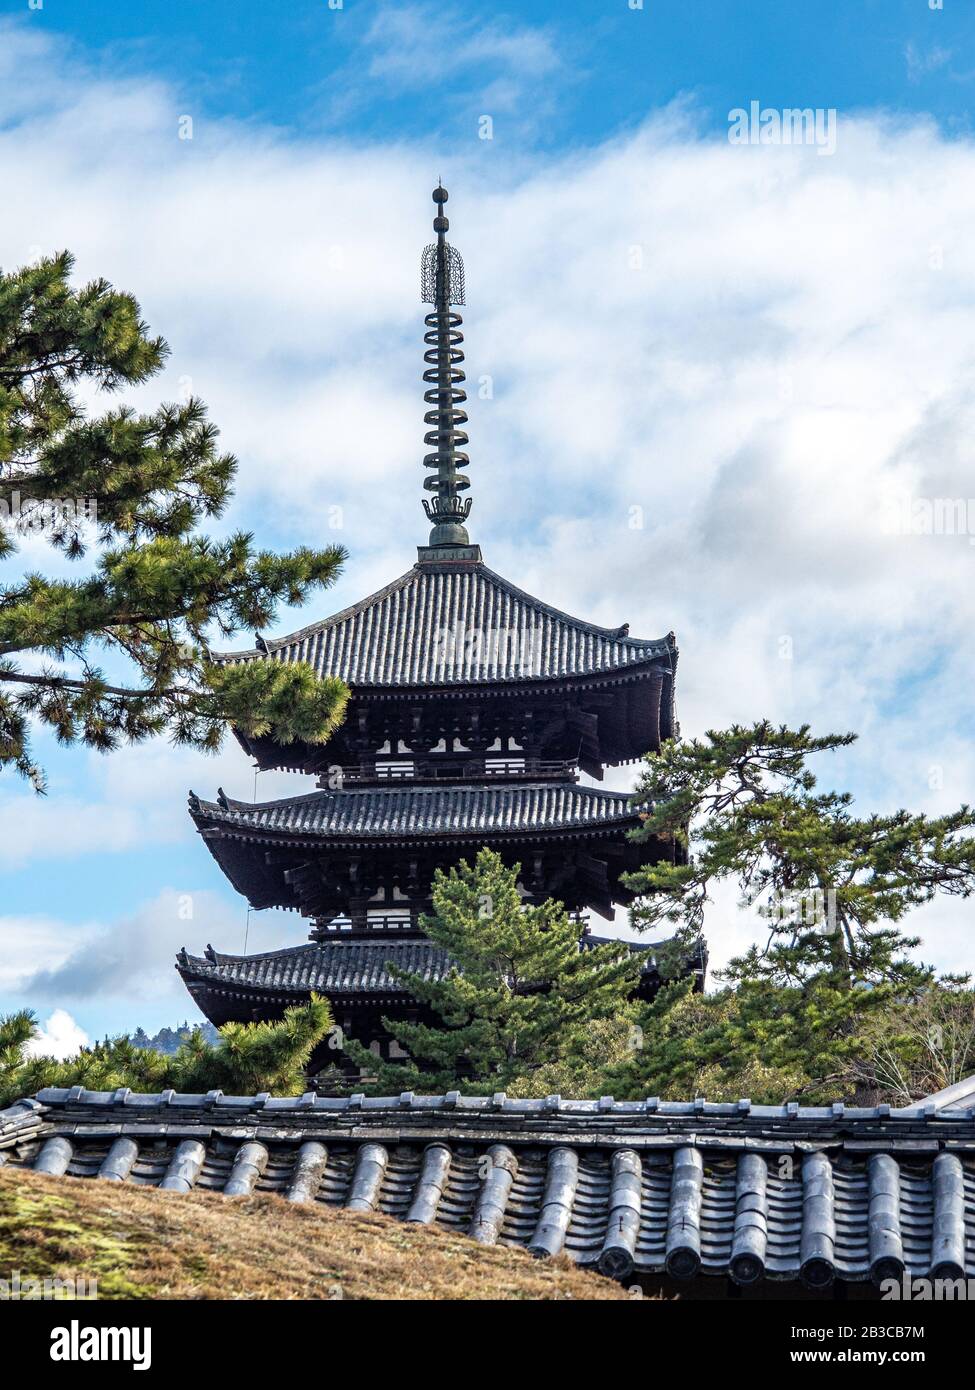 Ancient wooden pagoda of the Horyu-ji Temple. Stock Photo